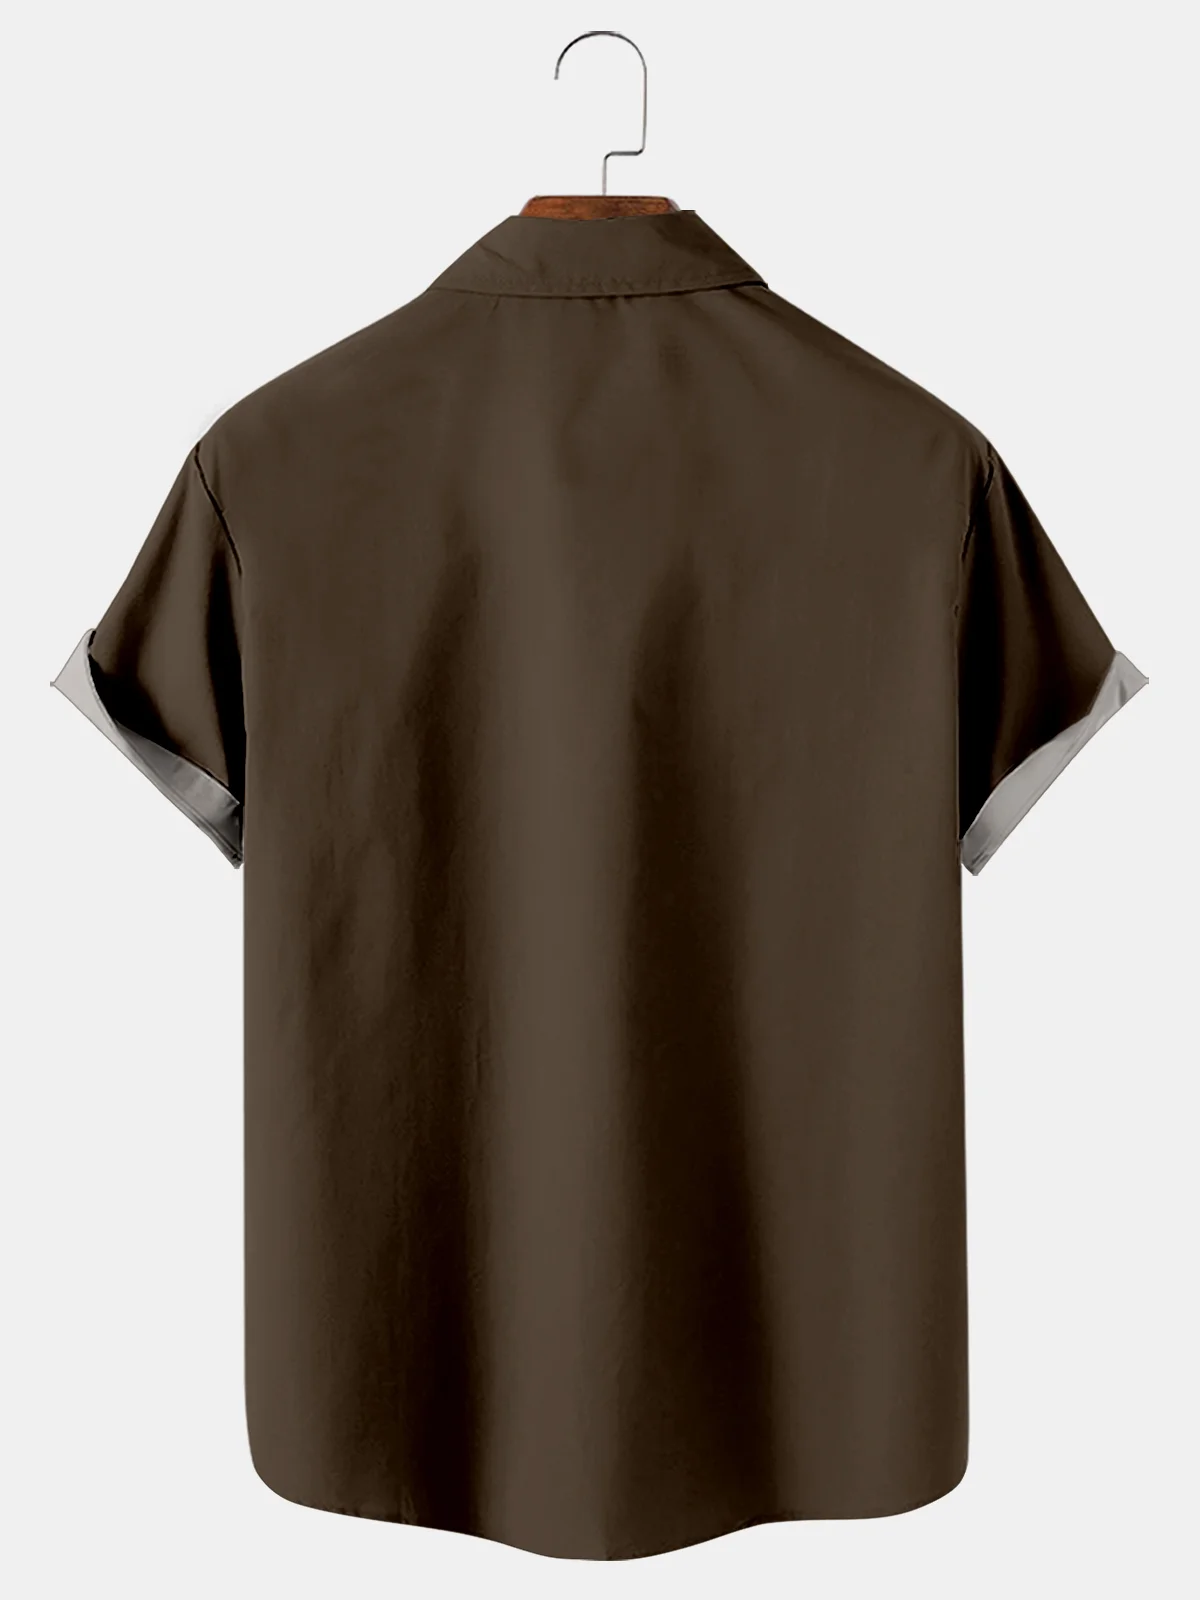 Royaura Brown Vintage Car Graphic Print Chest Bag Shirt Plus Size Shirt